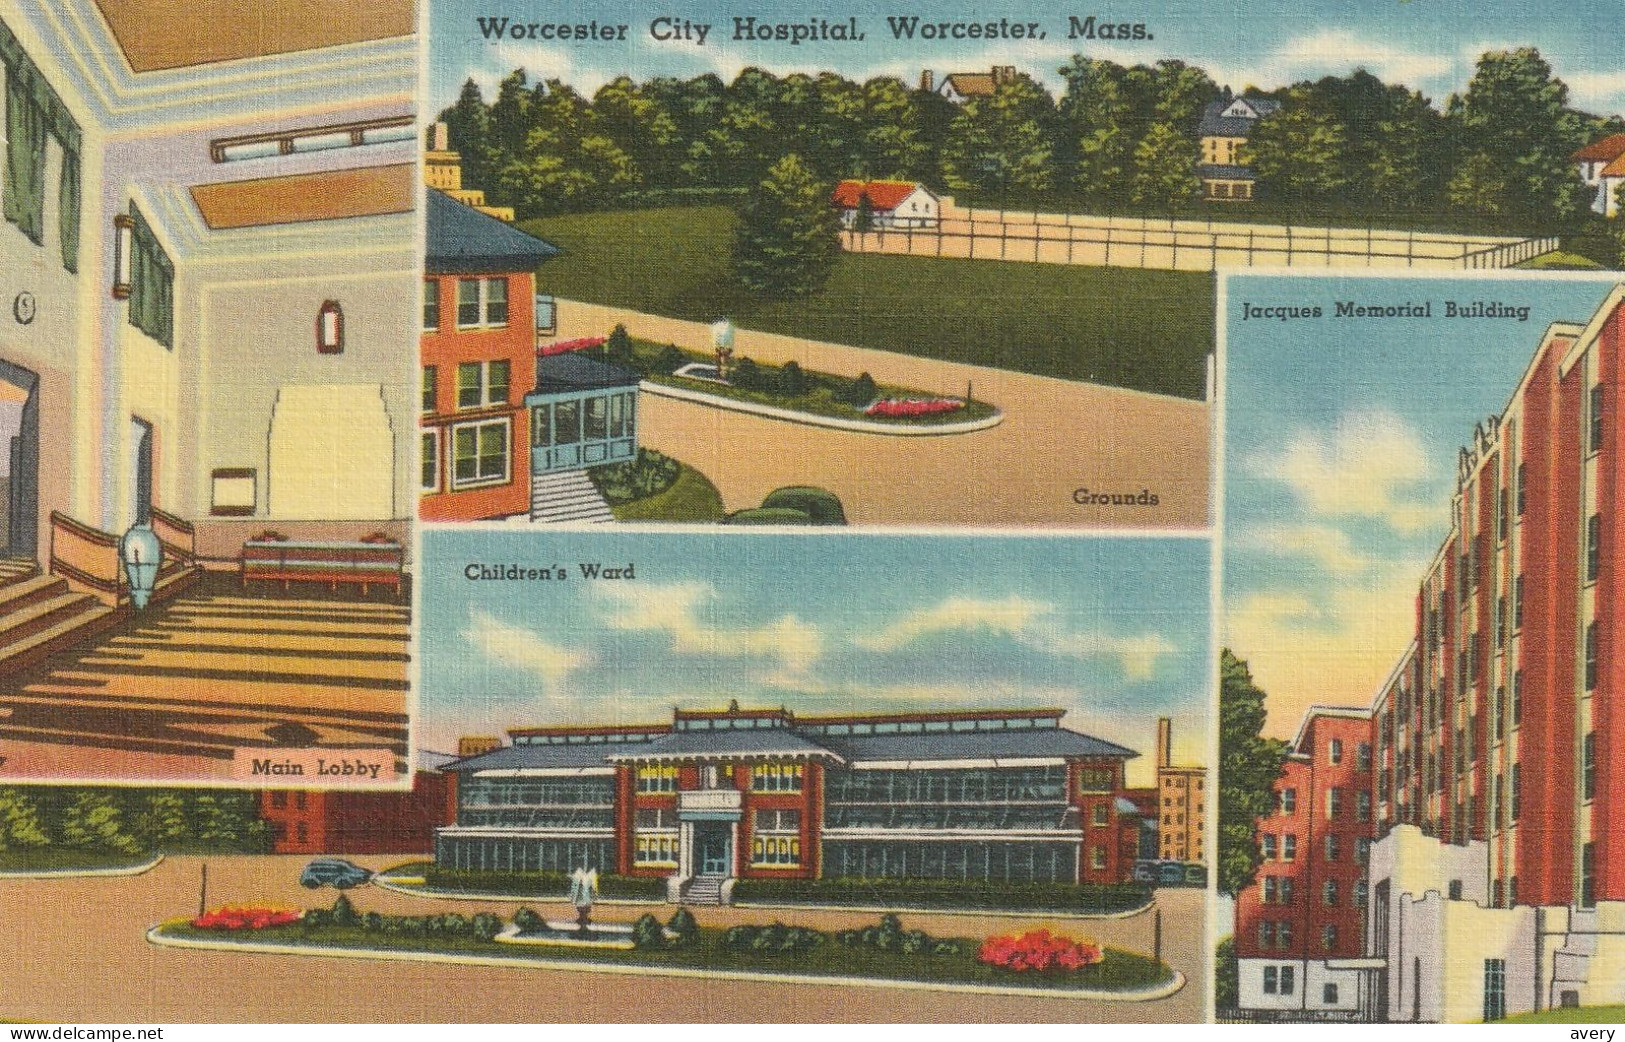 Worcester City Hospital, Worcester, Massachusetts - Worcester